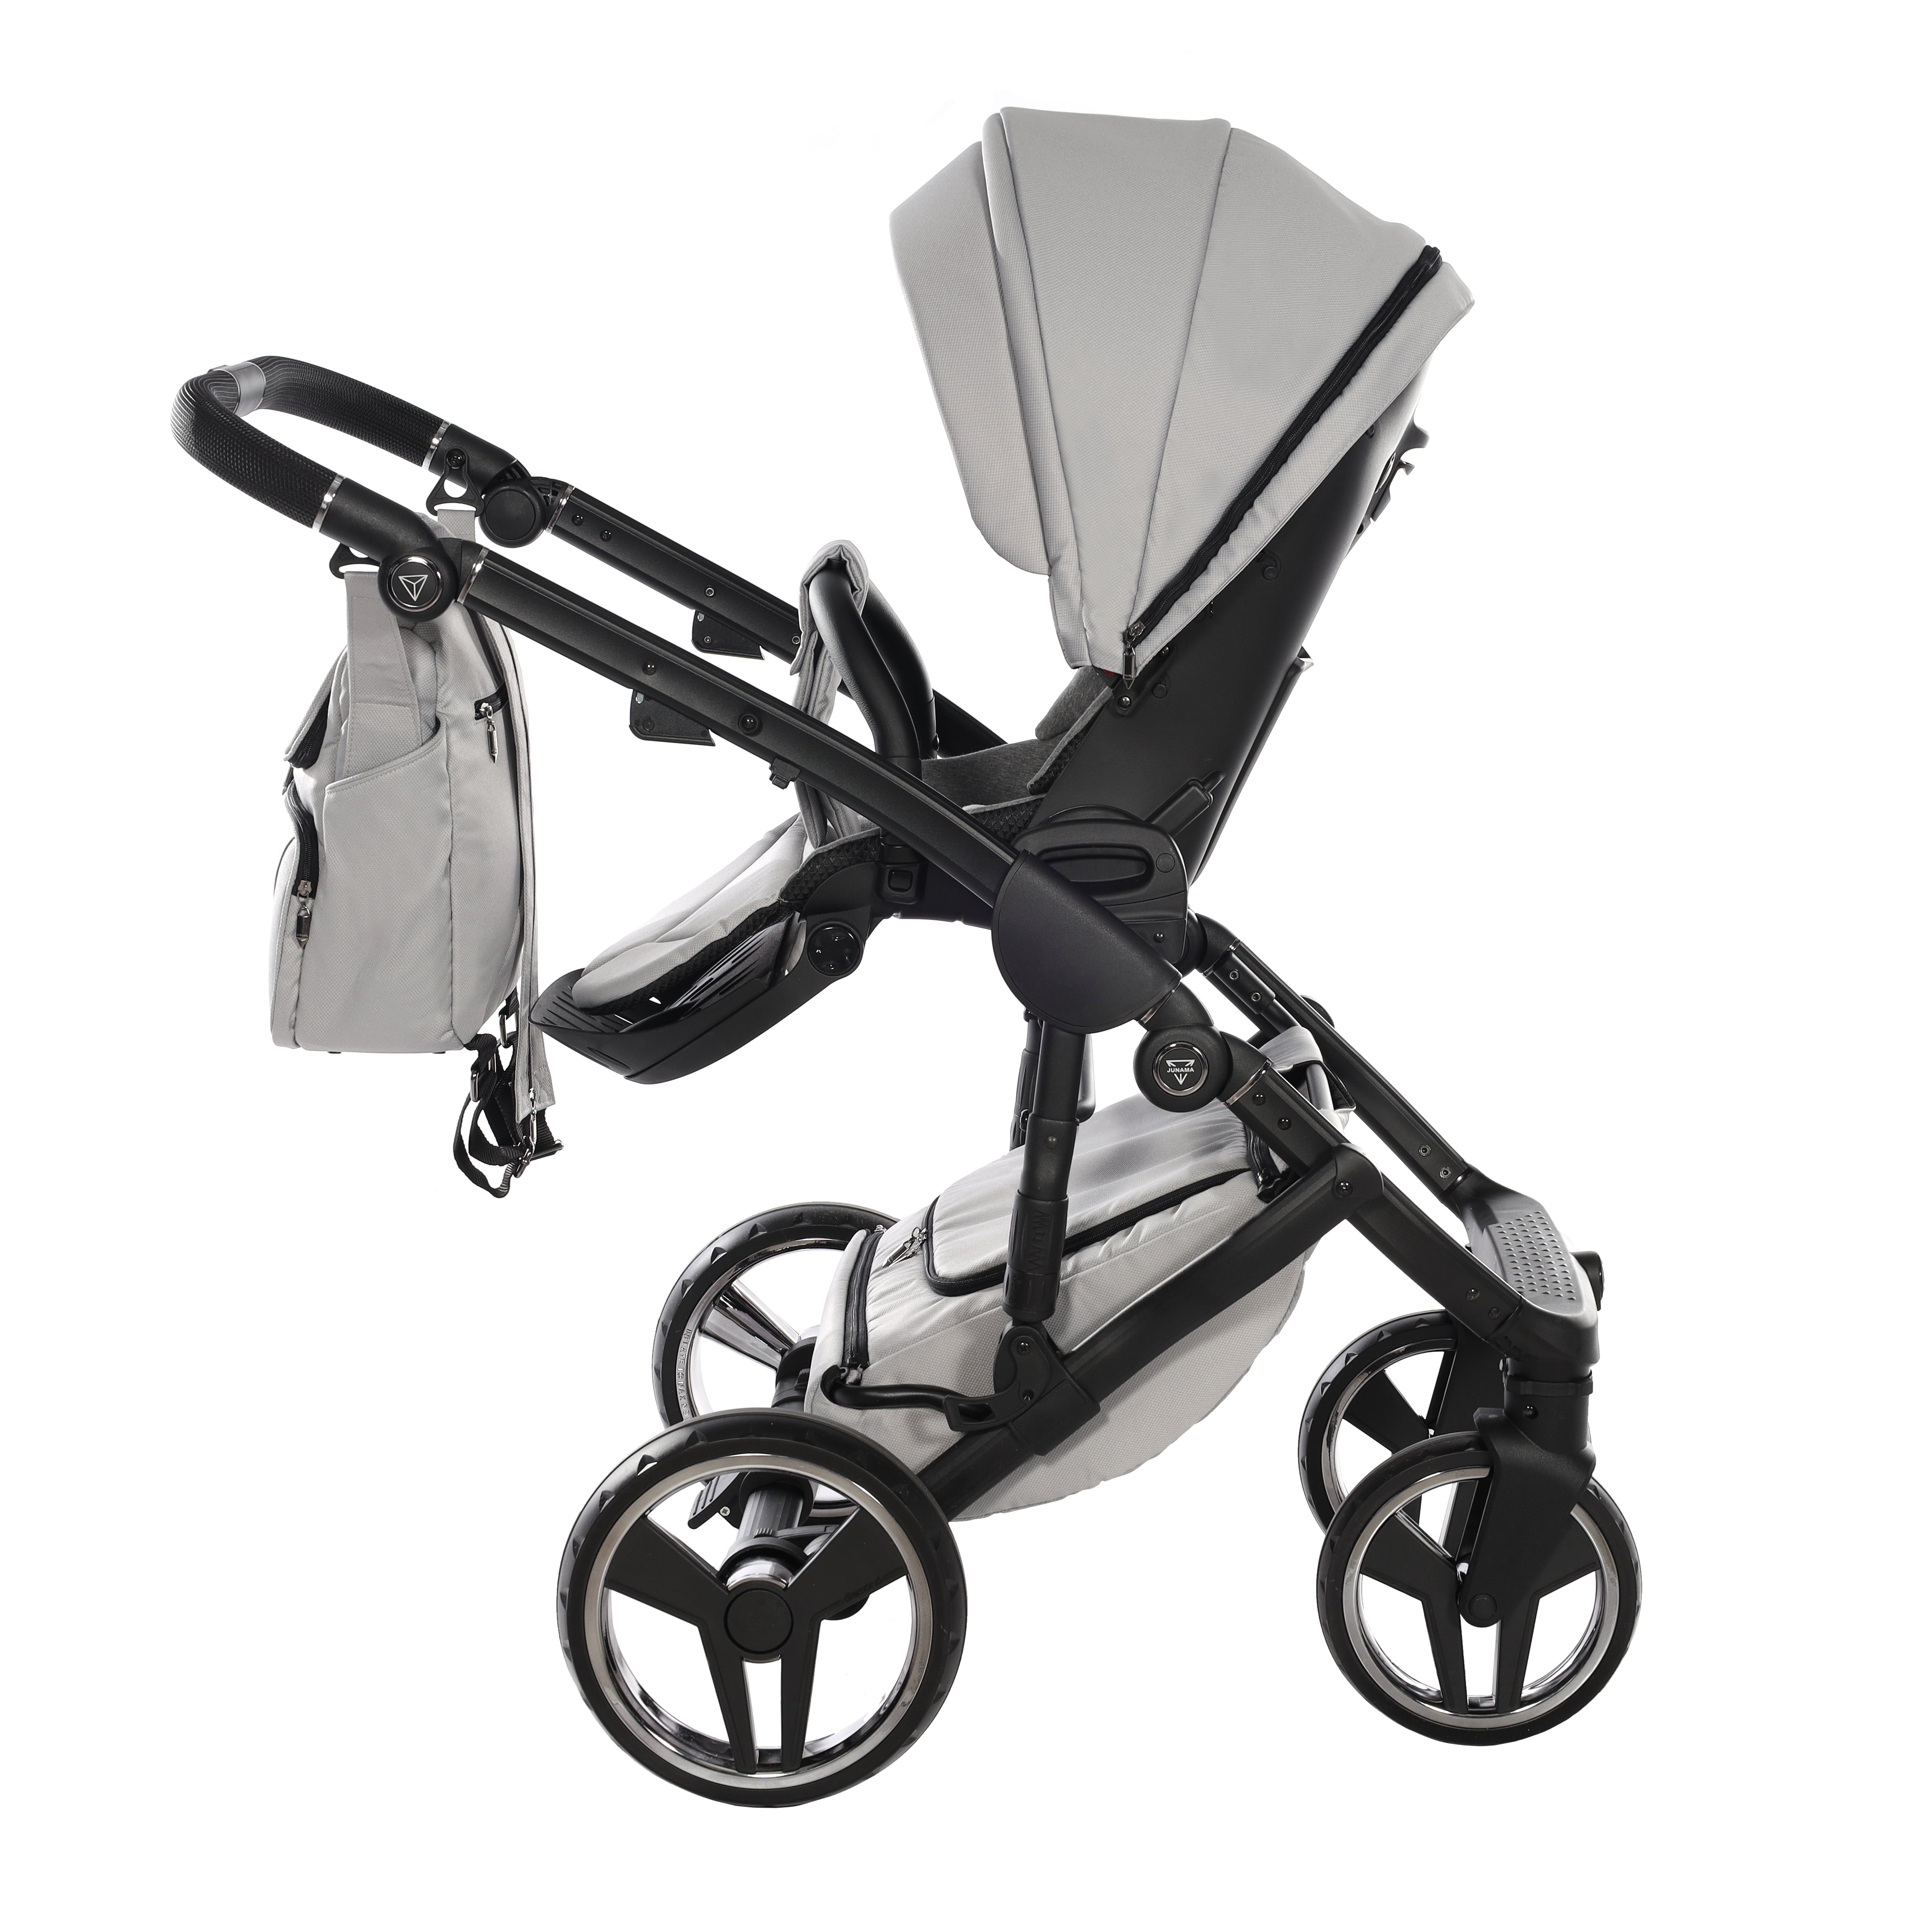 Junama BASIC, baby stroller and bassinet 2 in 1 - LIGHT GRAY, Code number: JUNBSC06